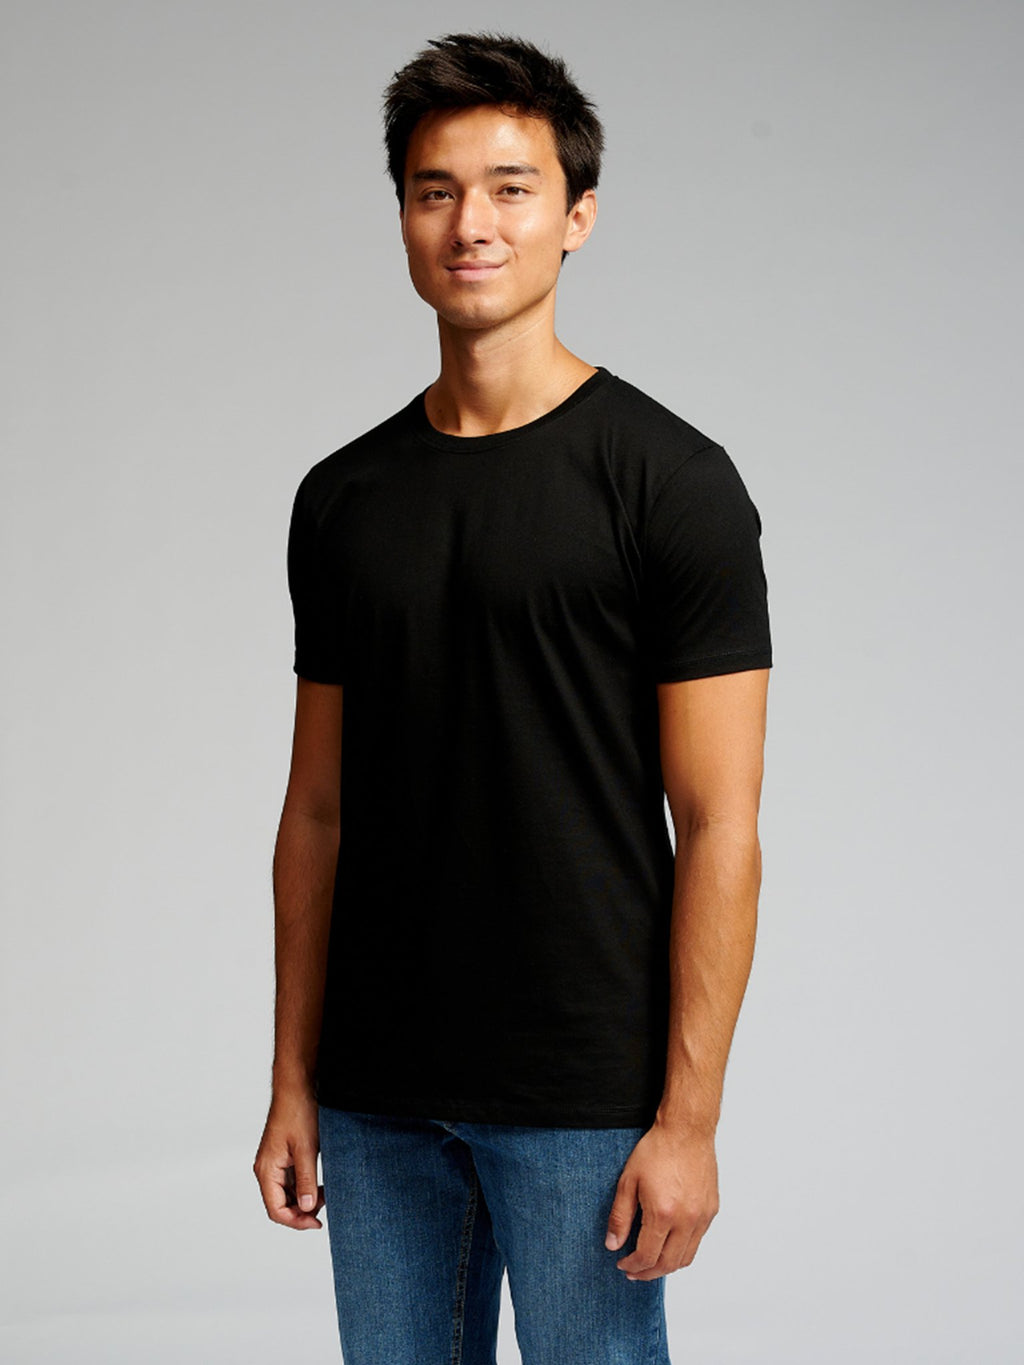 T-shirt musculaire - noir